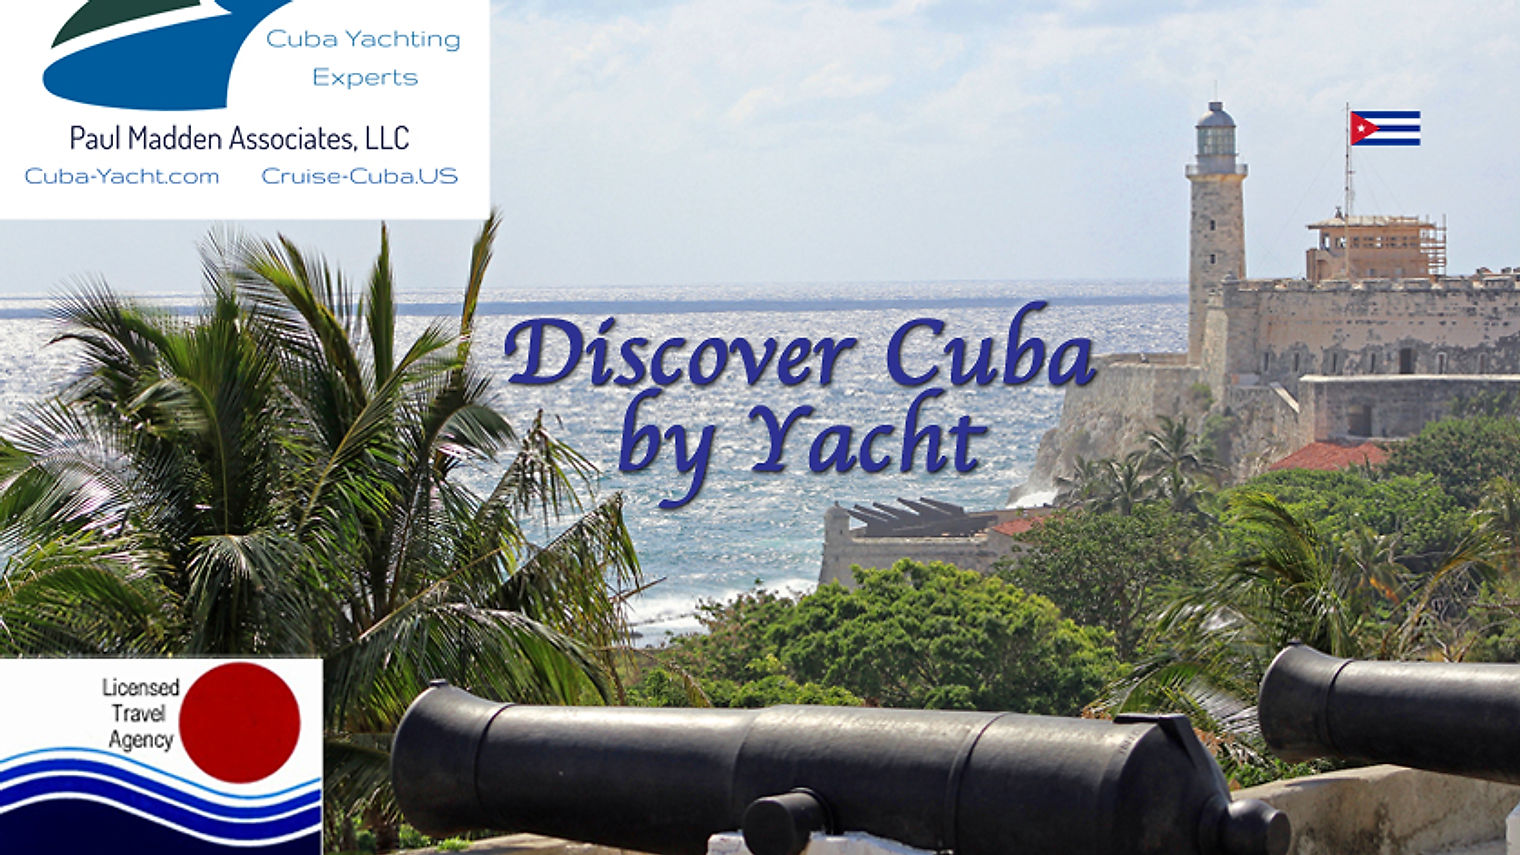 Cuba Yachting Videos